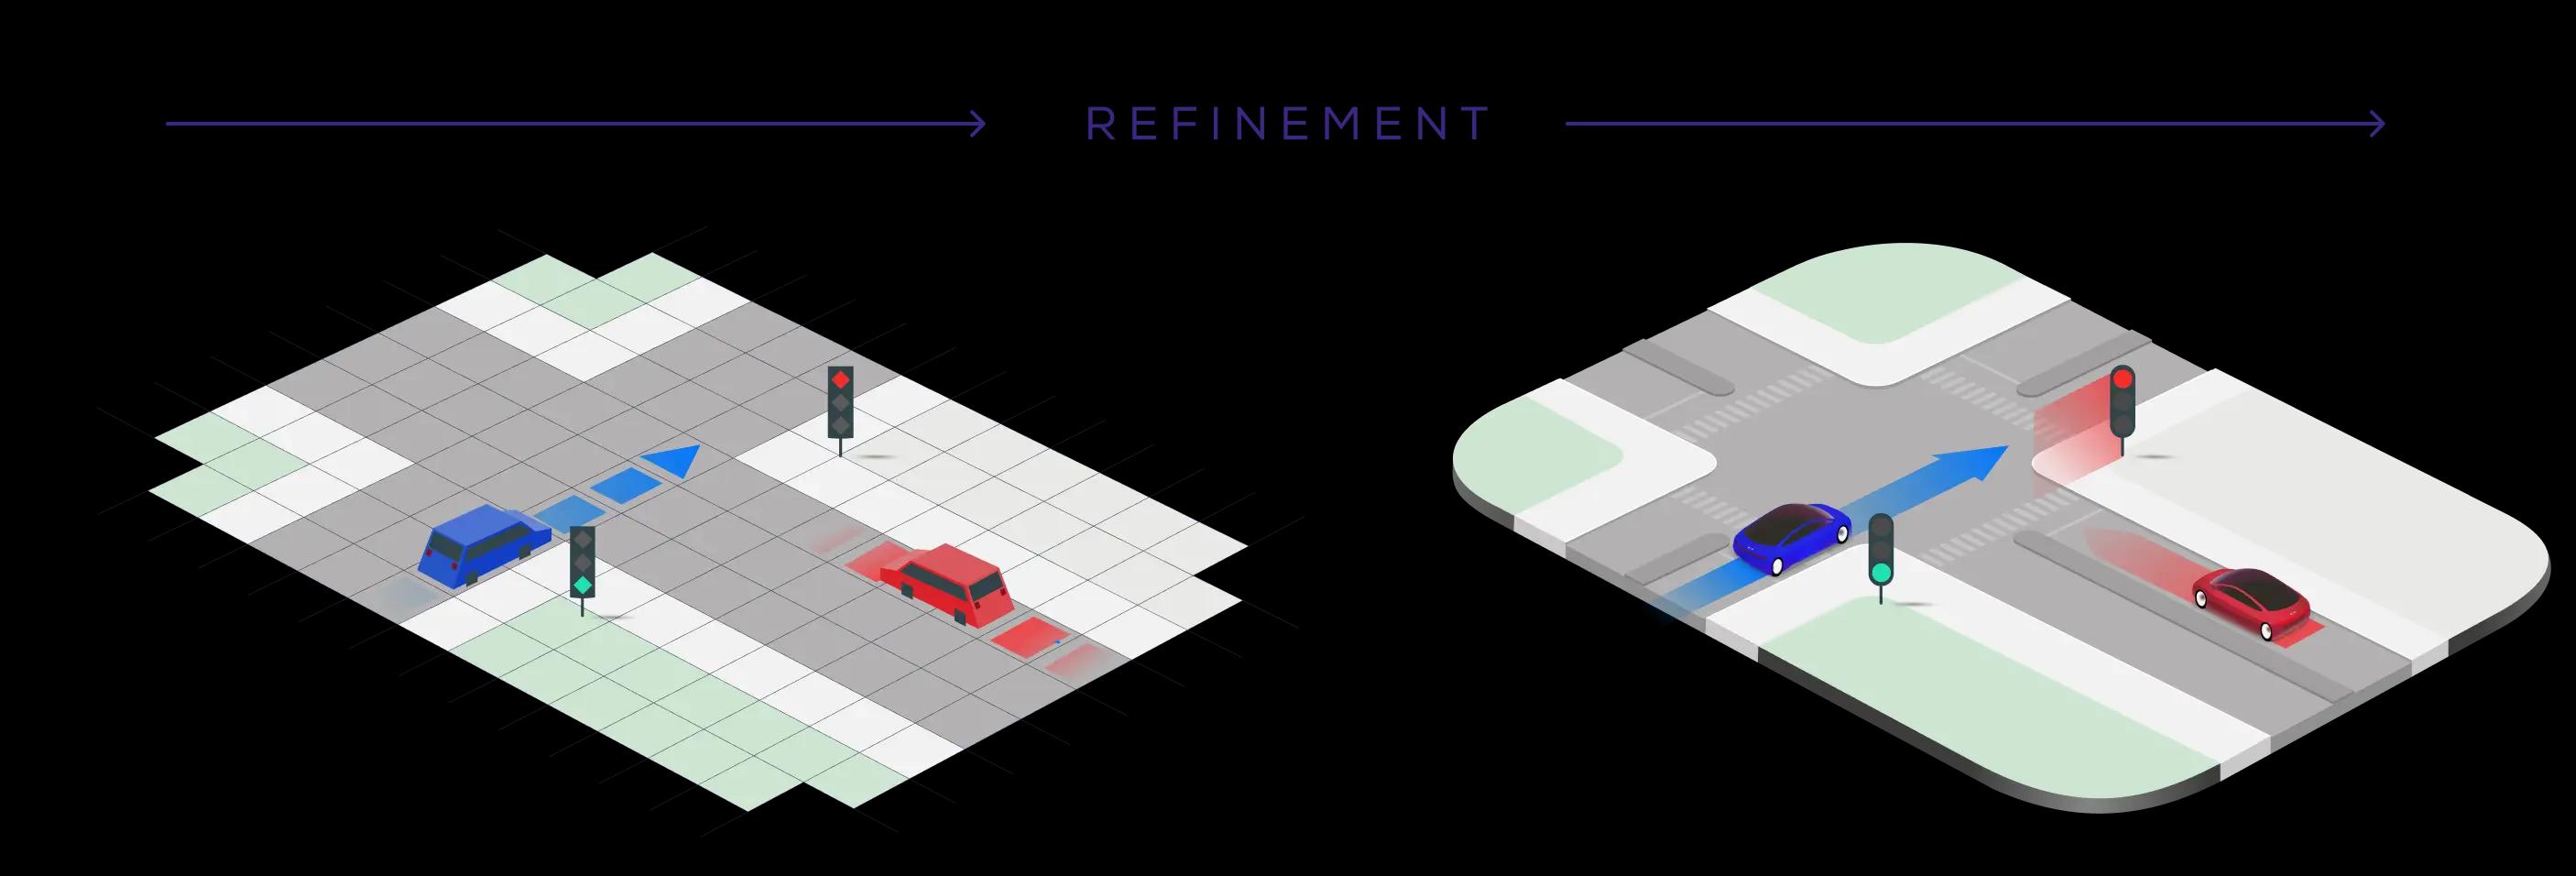 Model Refinement